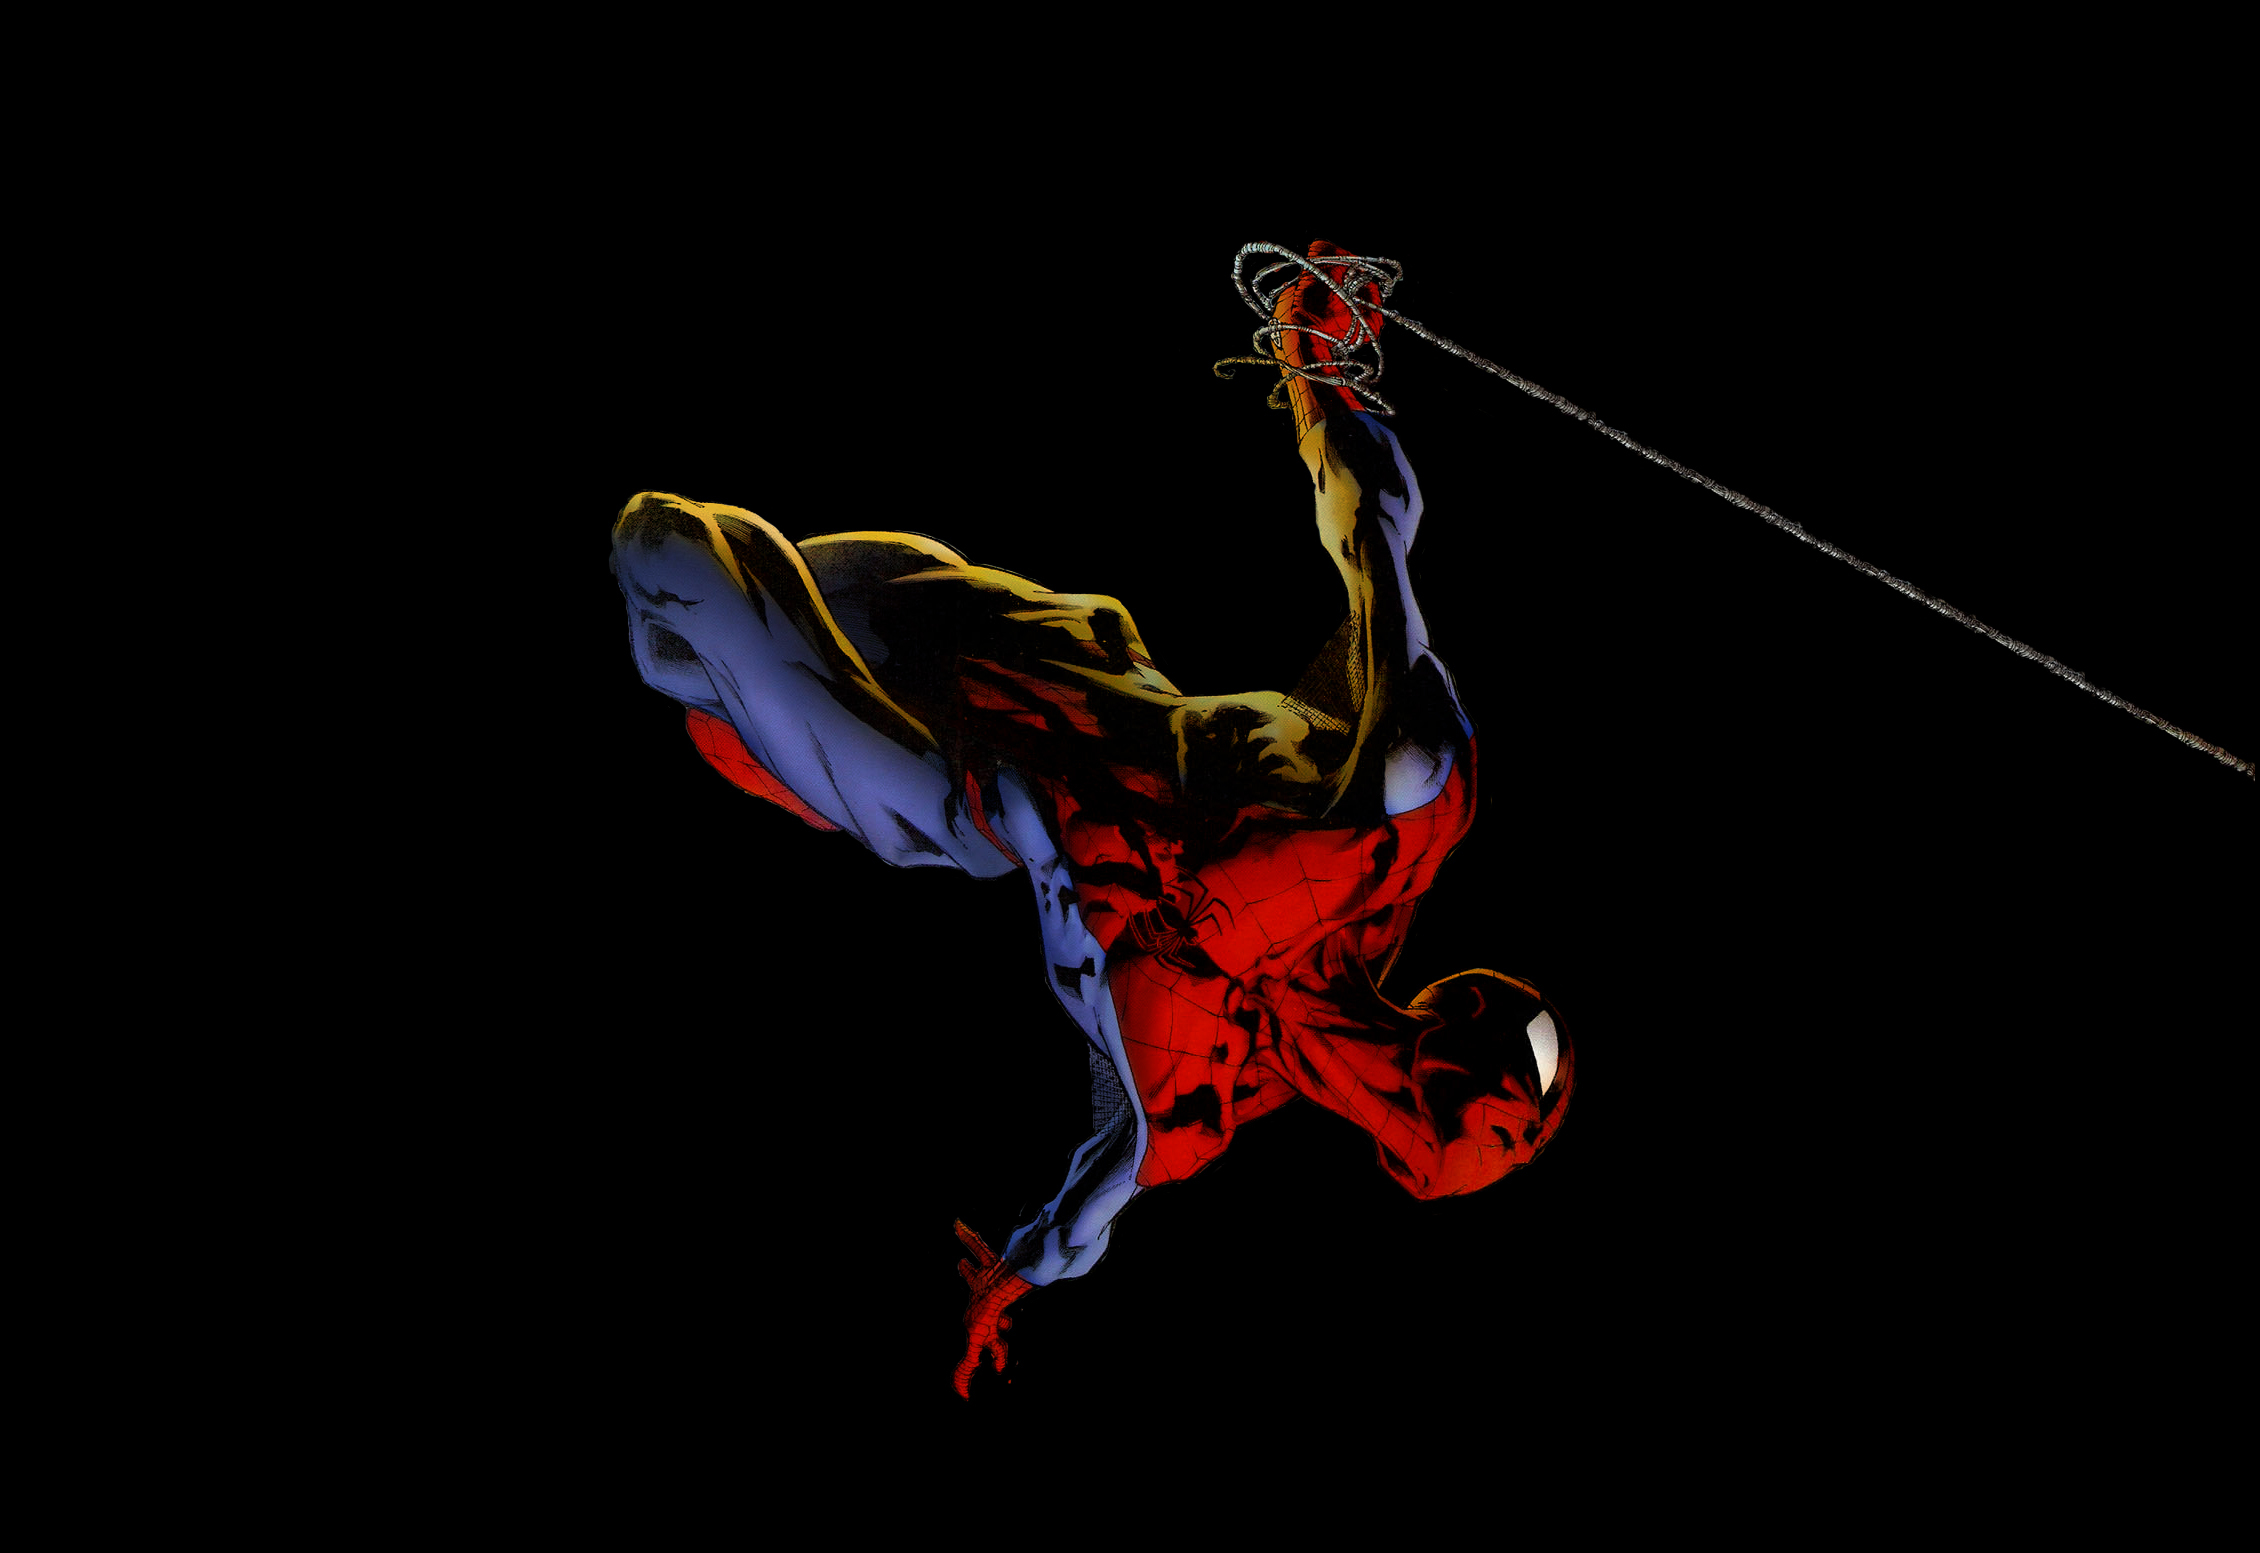 Spiderman Wallpaper  on Comics Spider Man Heroes Hd Wallpaper   Cartoon   Animation   876453